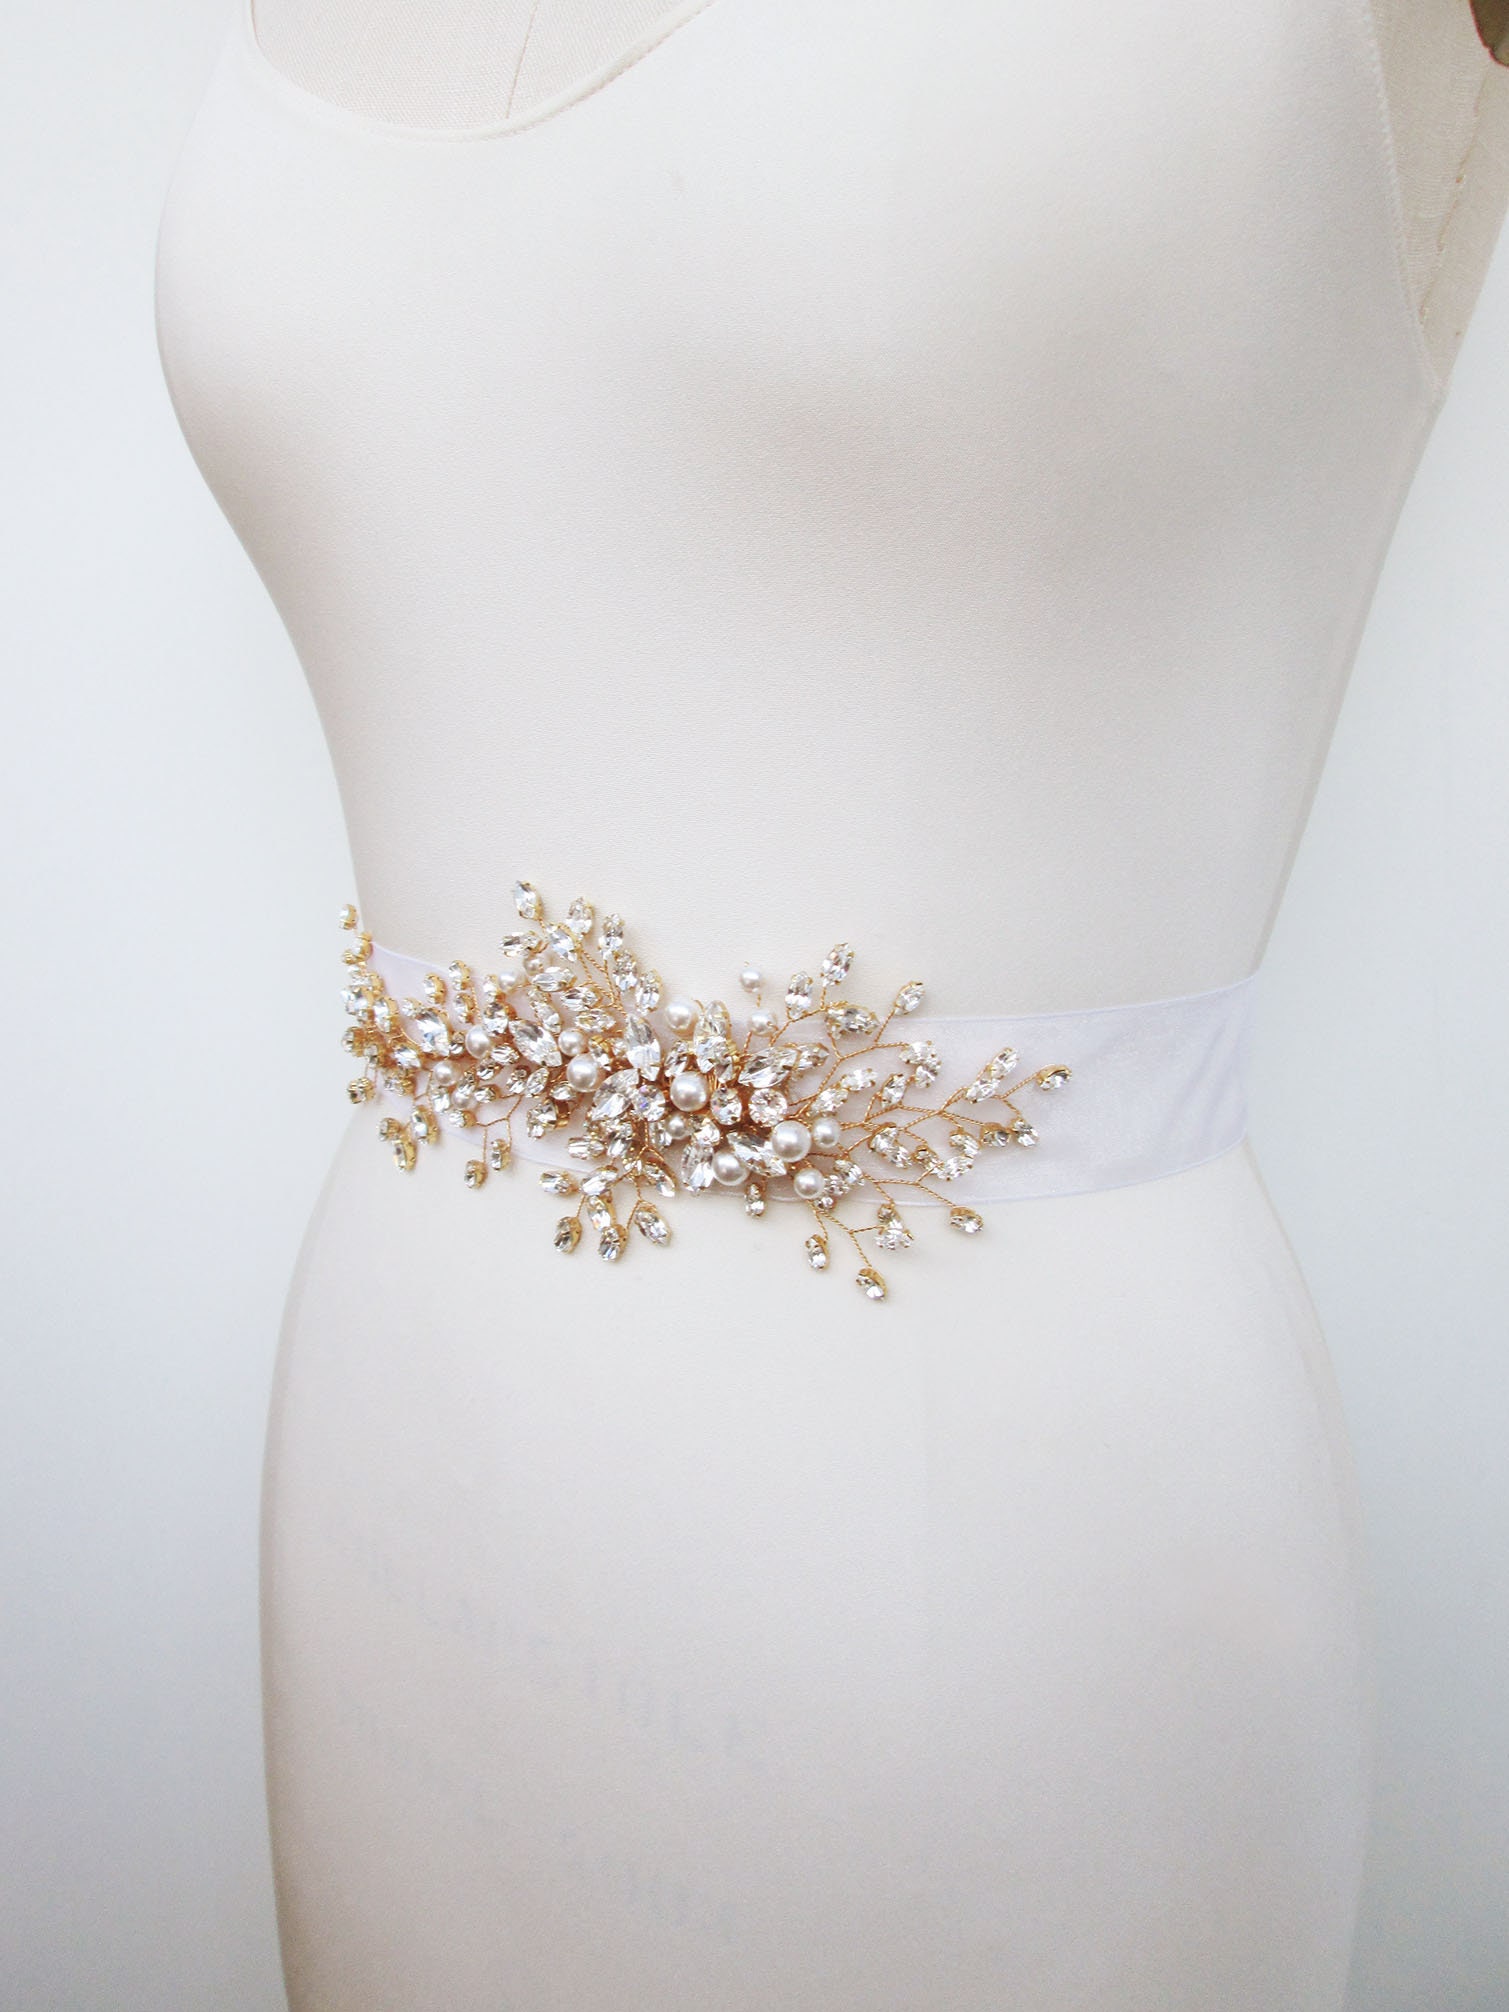 Exquisite bridal belt sash, Crystal and pearl wedding belt, Organza